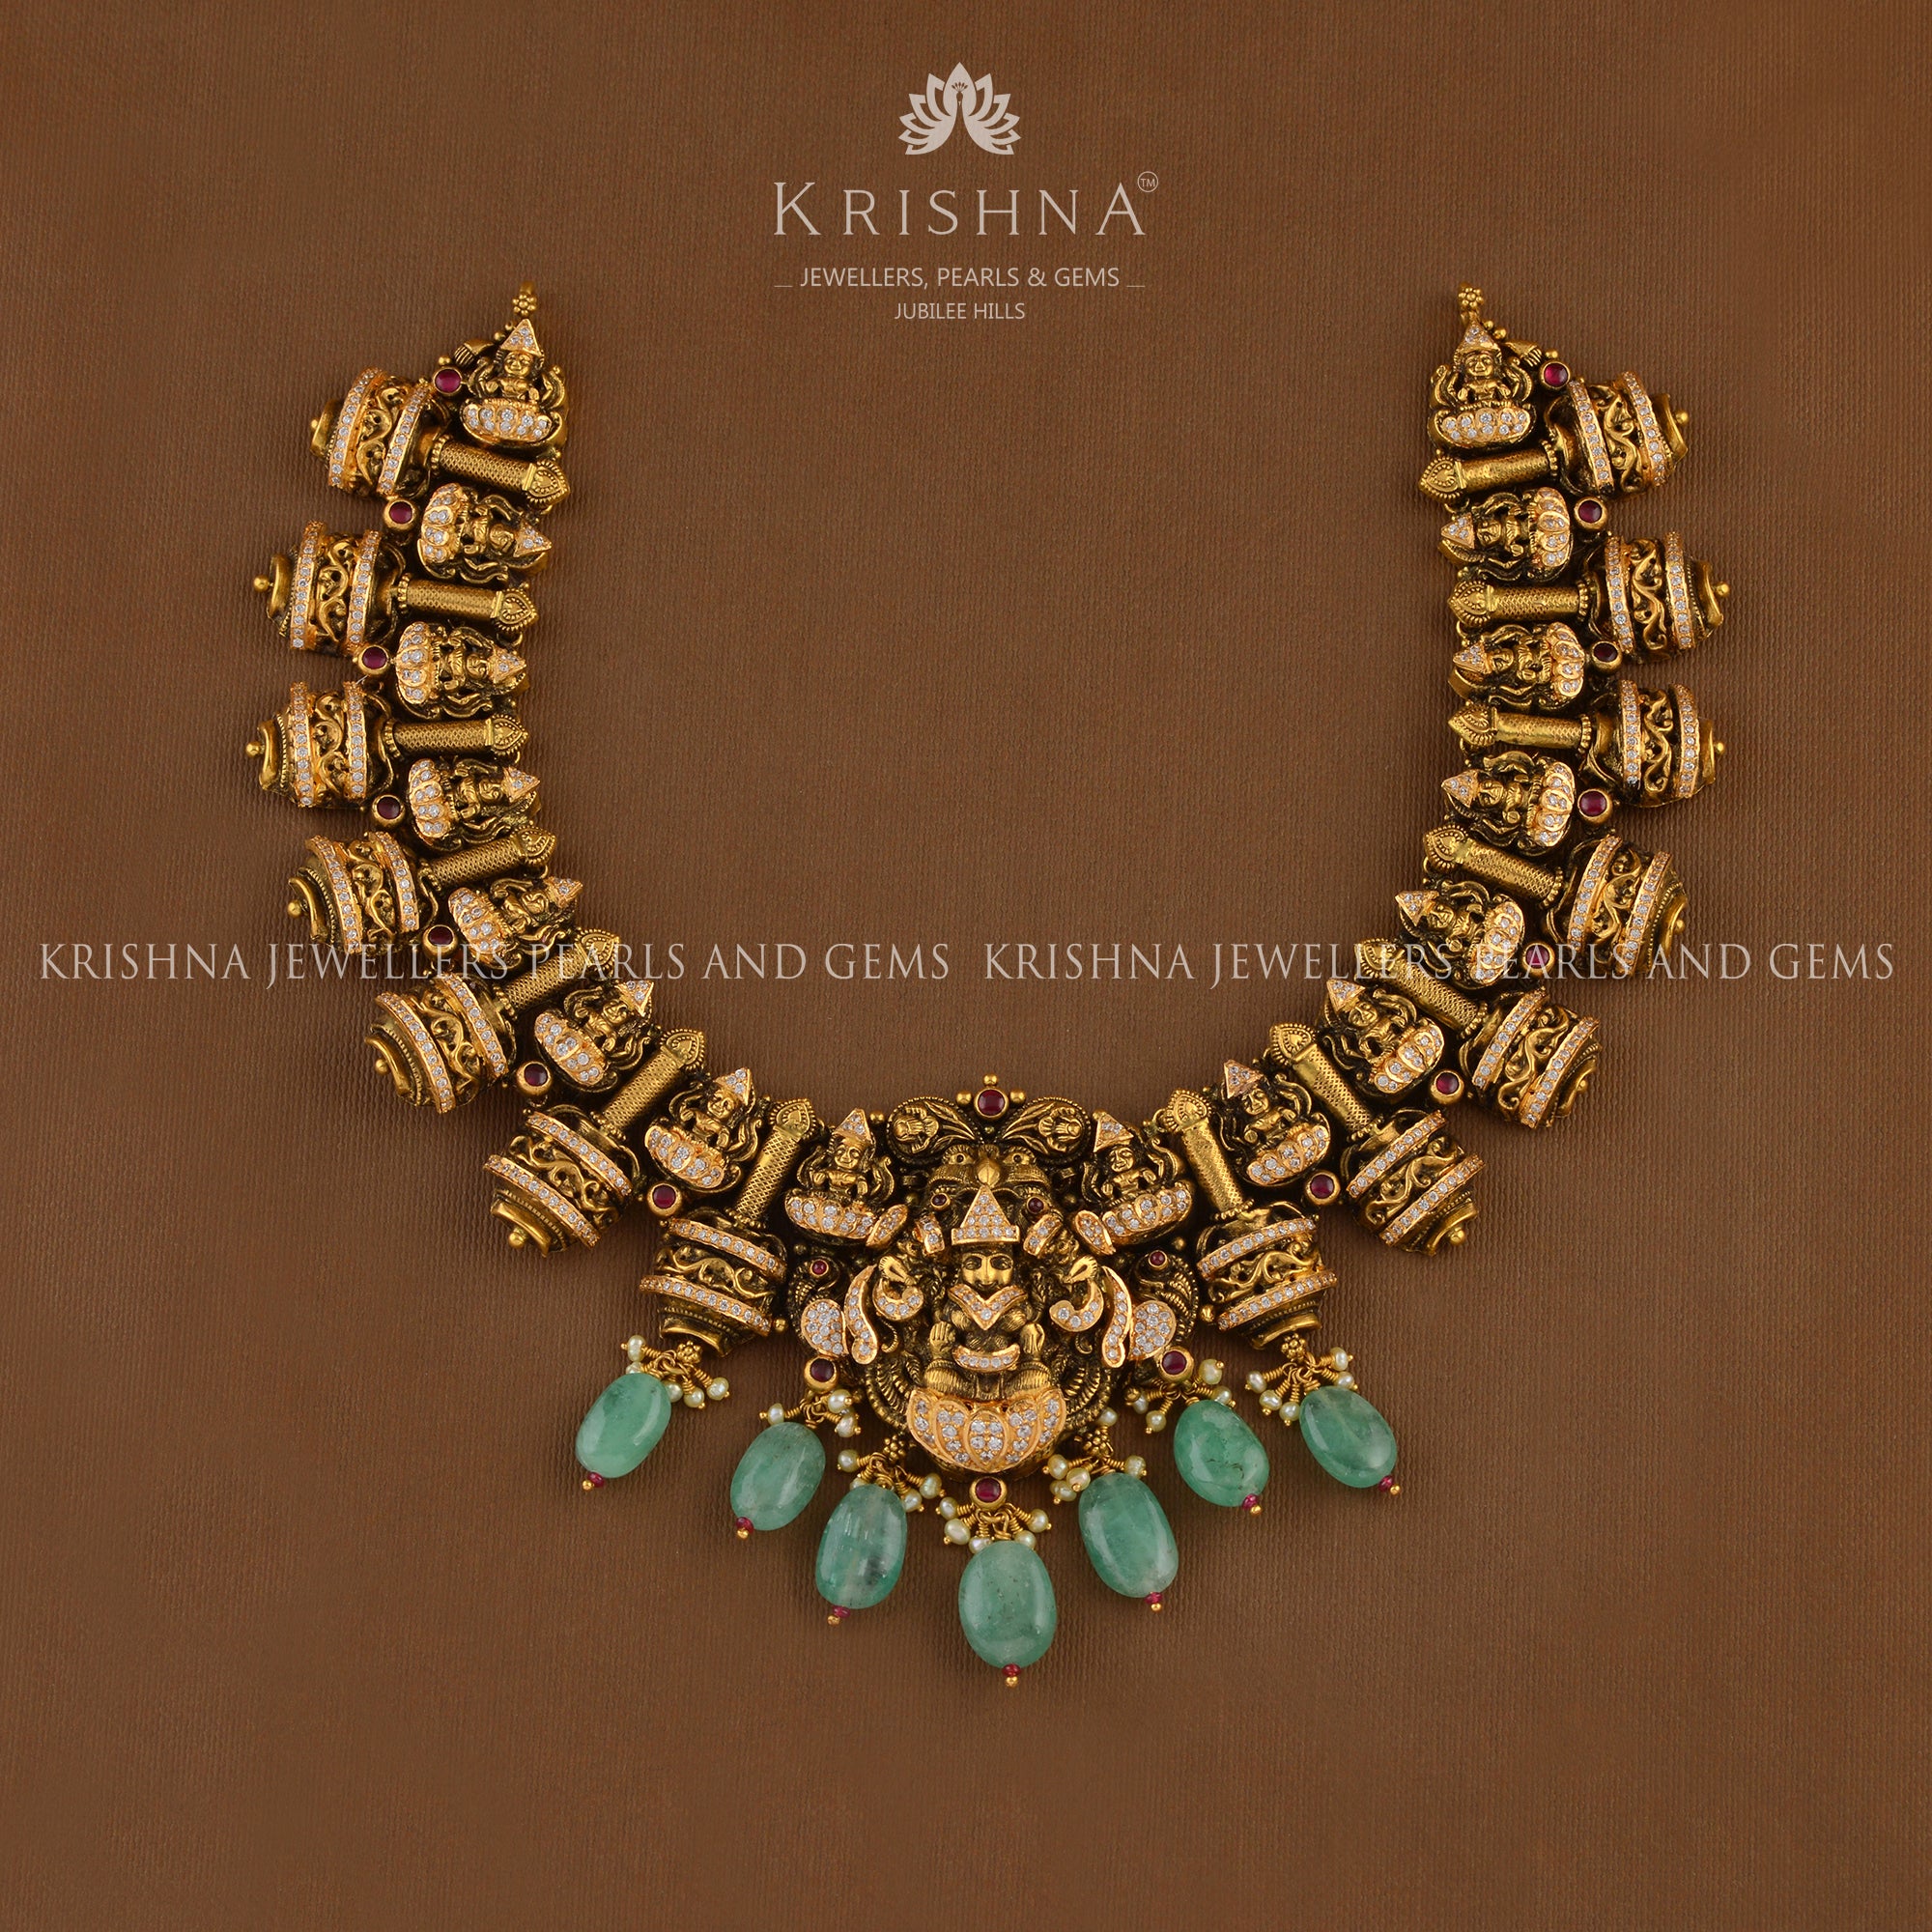 Divine Laxmi Gold Necklace - Krishna Jewellers Pearls and Gems